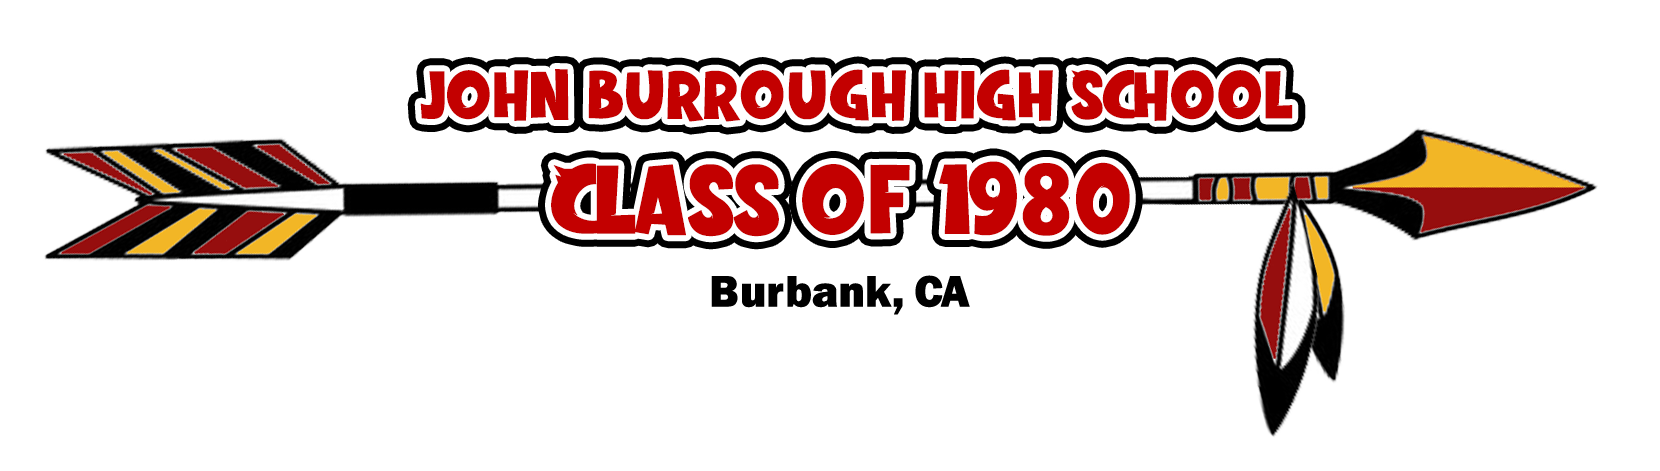 John Burroughs Class of 1980 | Burbank, California